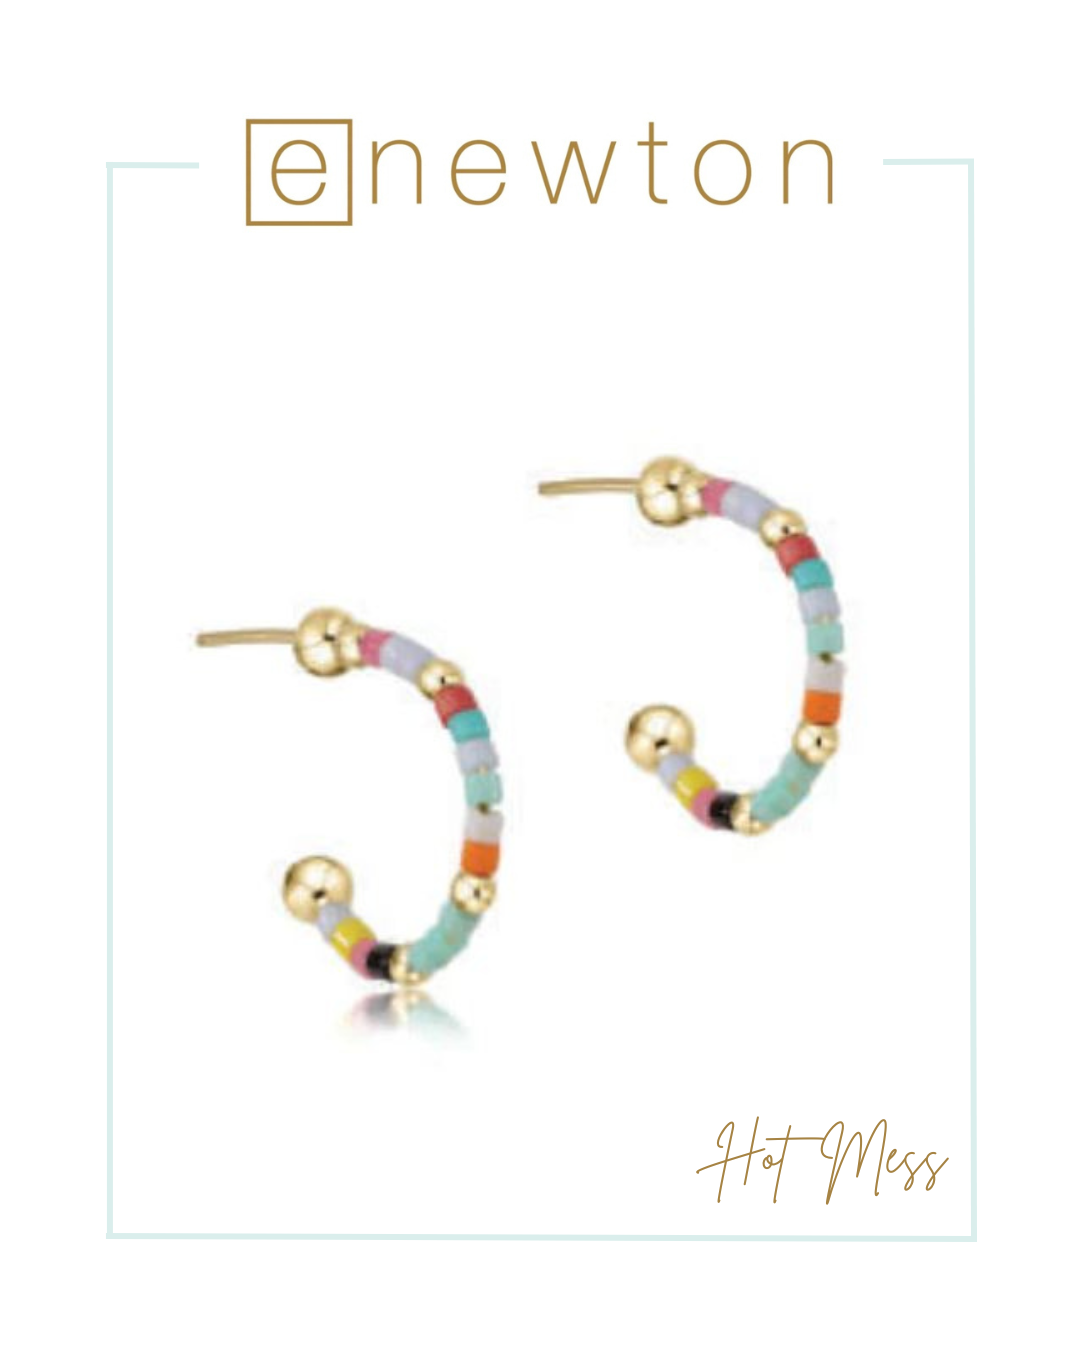 E Newton Hope Unwritten 1" Post Hoop-Earrings-ENEWTON-The Village Shoppe, Women’s Fashion Boutique, Shop Online and In Store - Located in Muscle Shoals, AL.